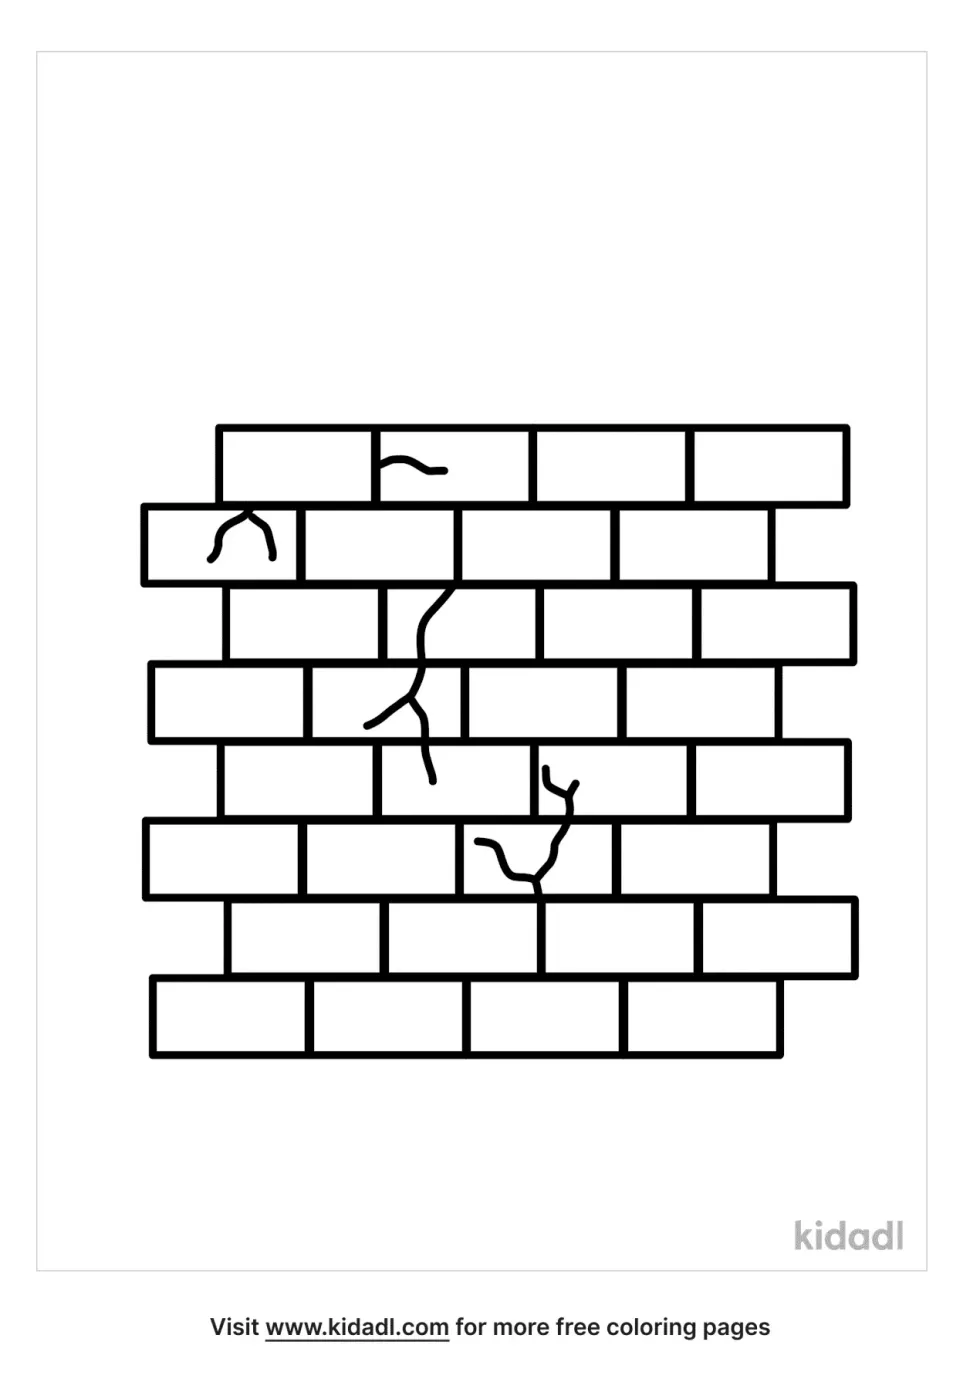 Brick Wall | Kidadl